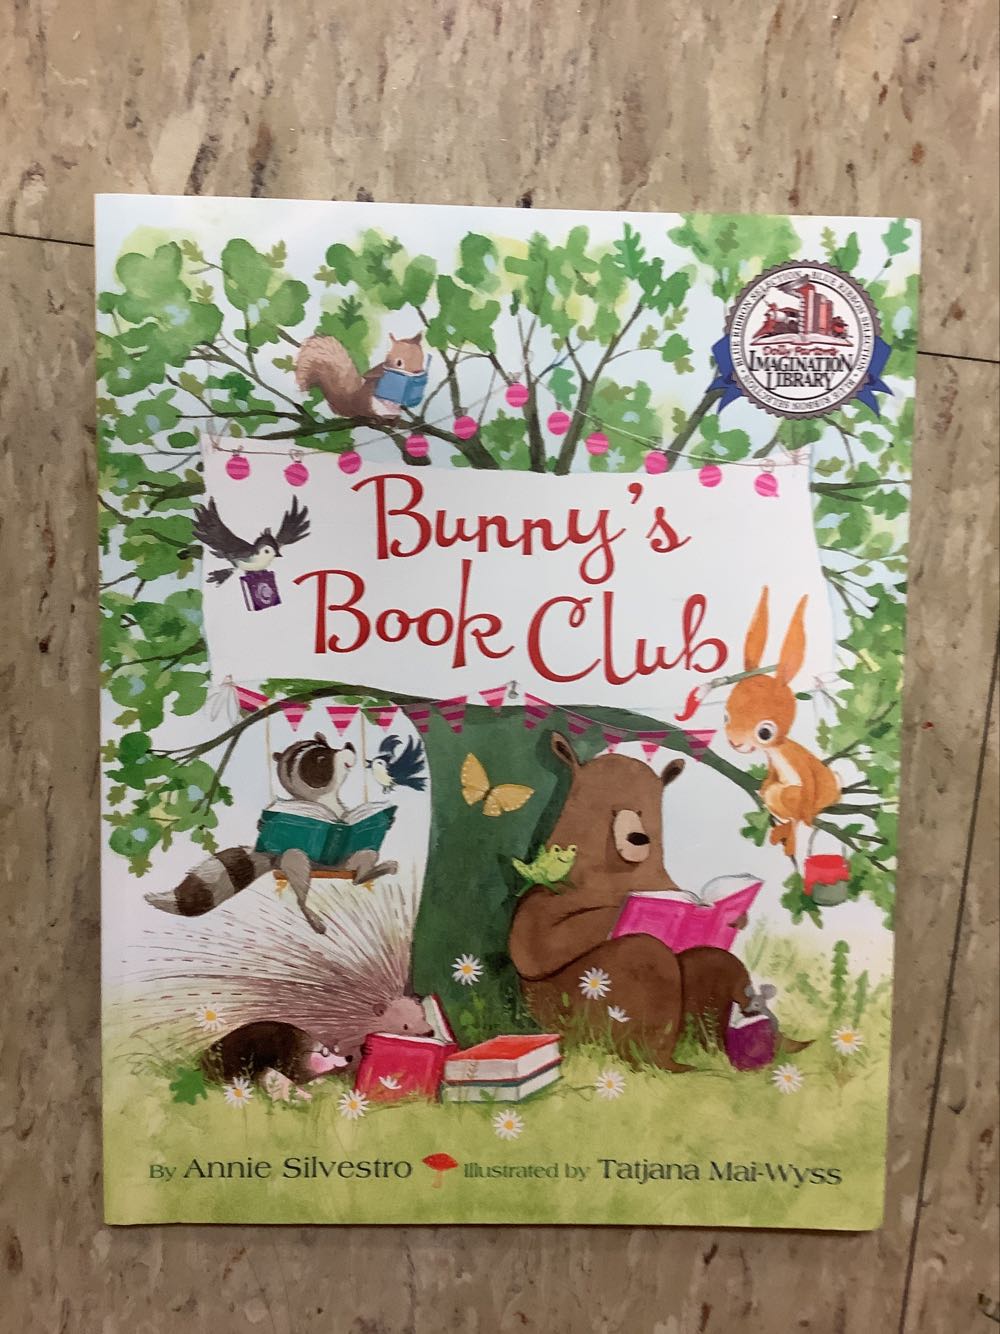 Bunnys Book Club - Annie Silvestro book collectible - Main Image 1